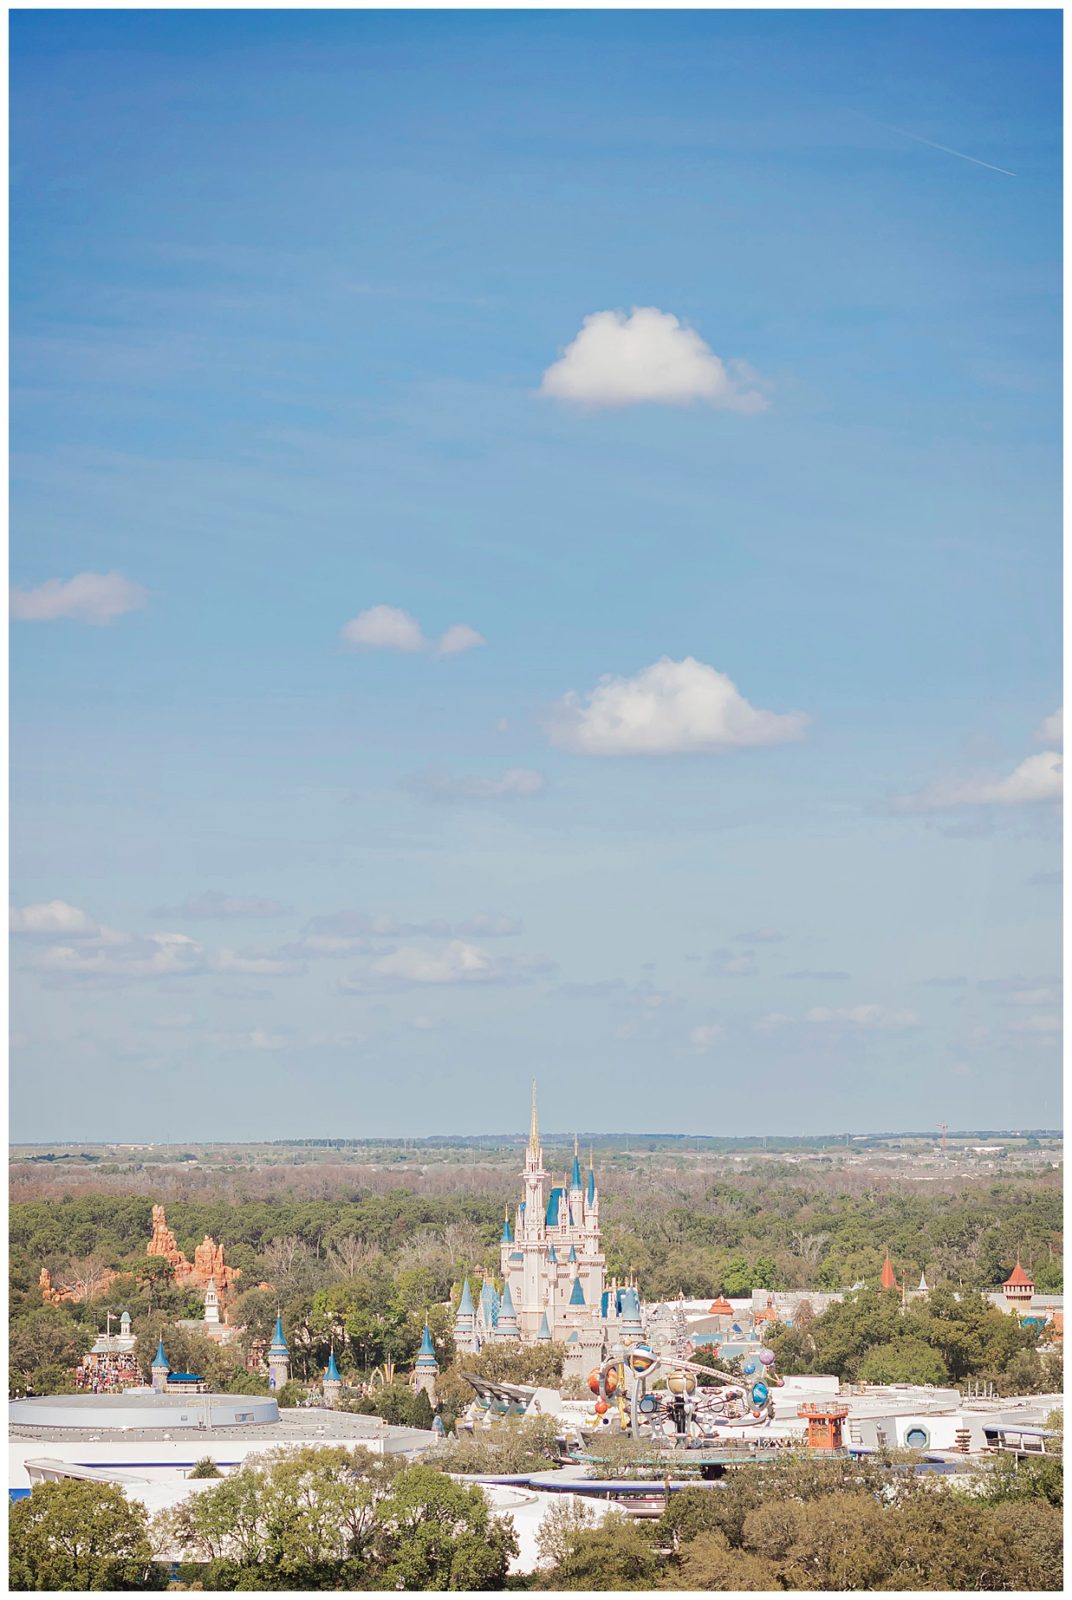 Disney's Wedding Pavilion Destination Wedding - Minneapolis, Minnesota to Orlando, Florida for beautiful, true-color, timeless photography.